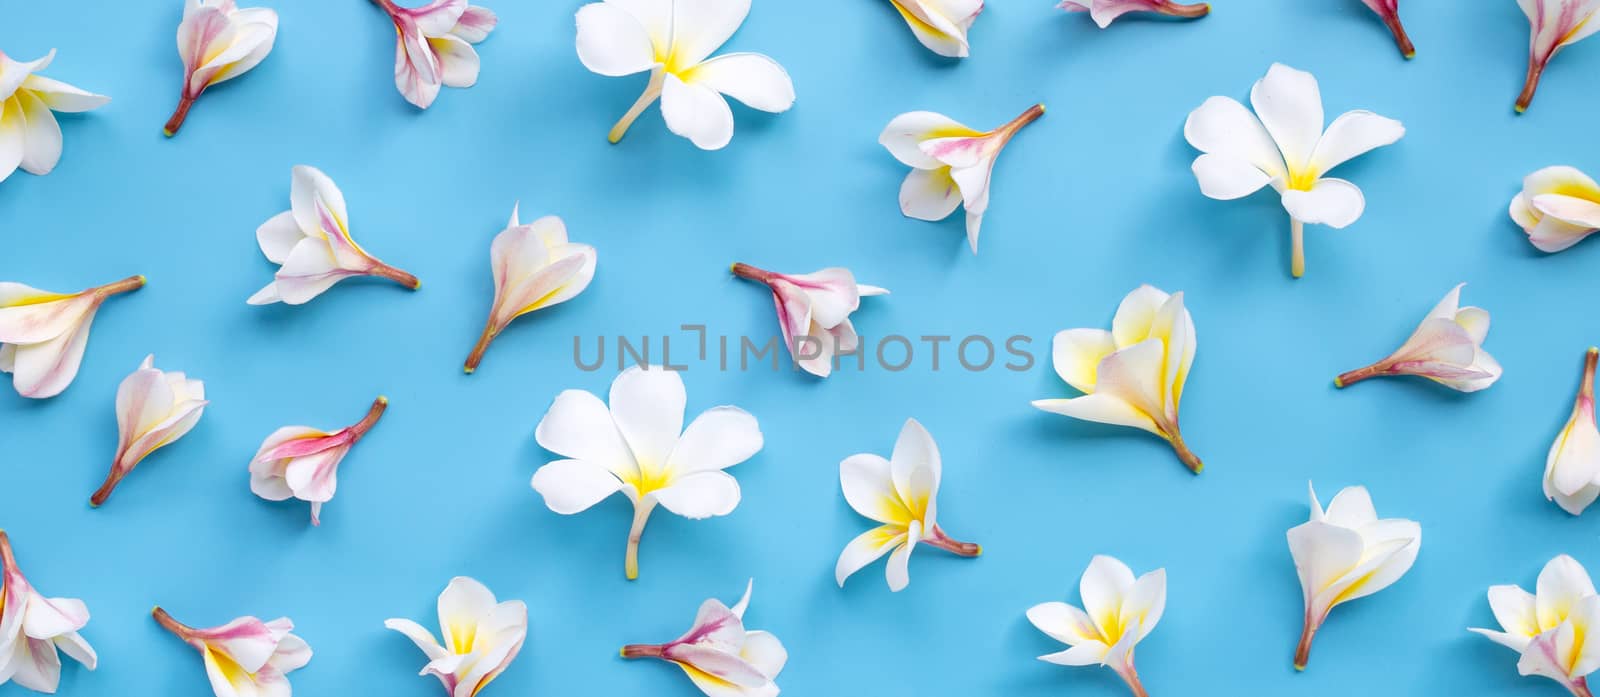 Plumeria or frangipani flower on blue background. Top view